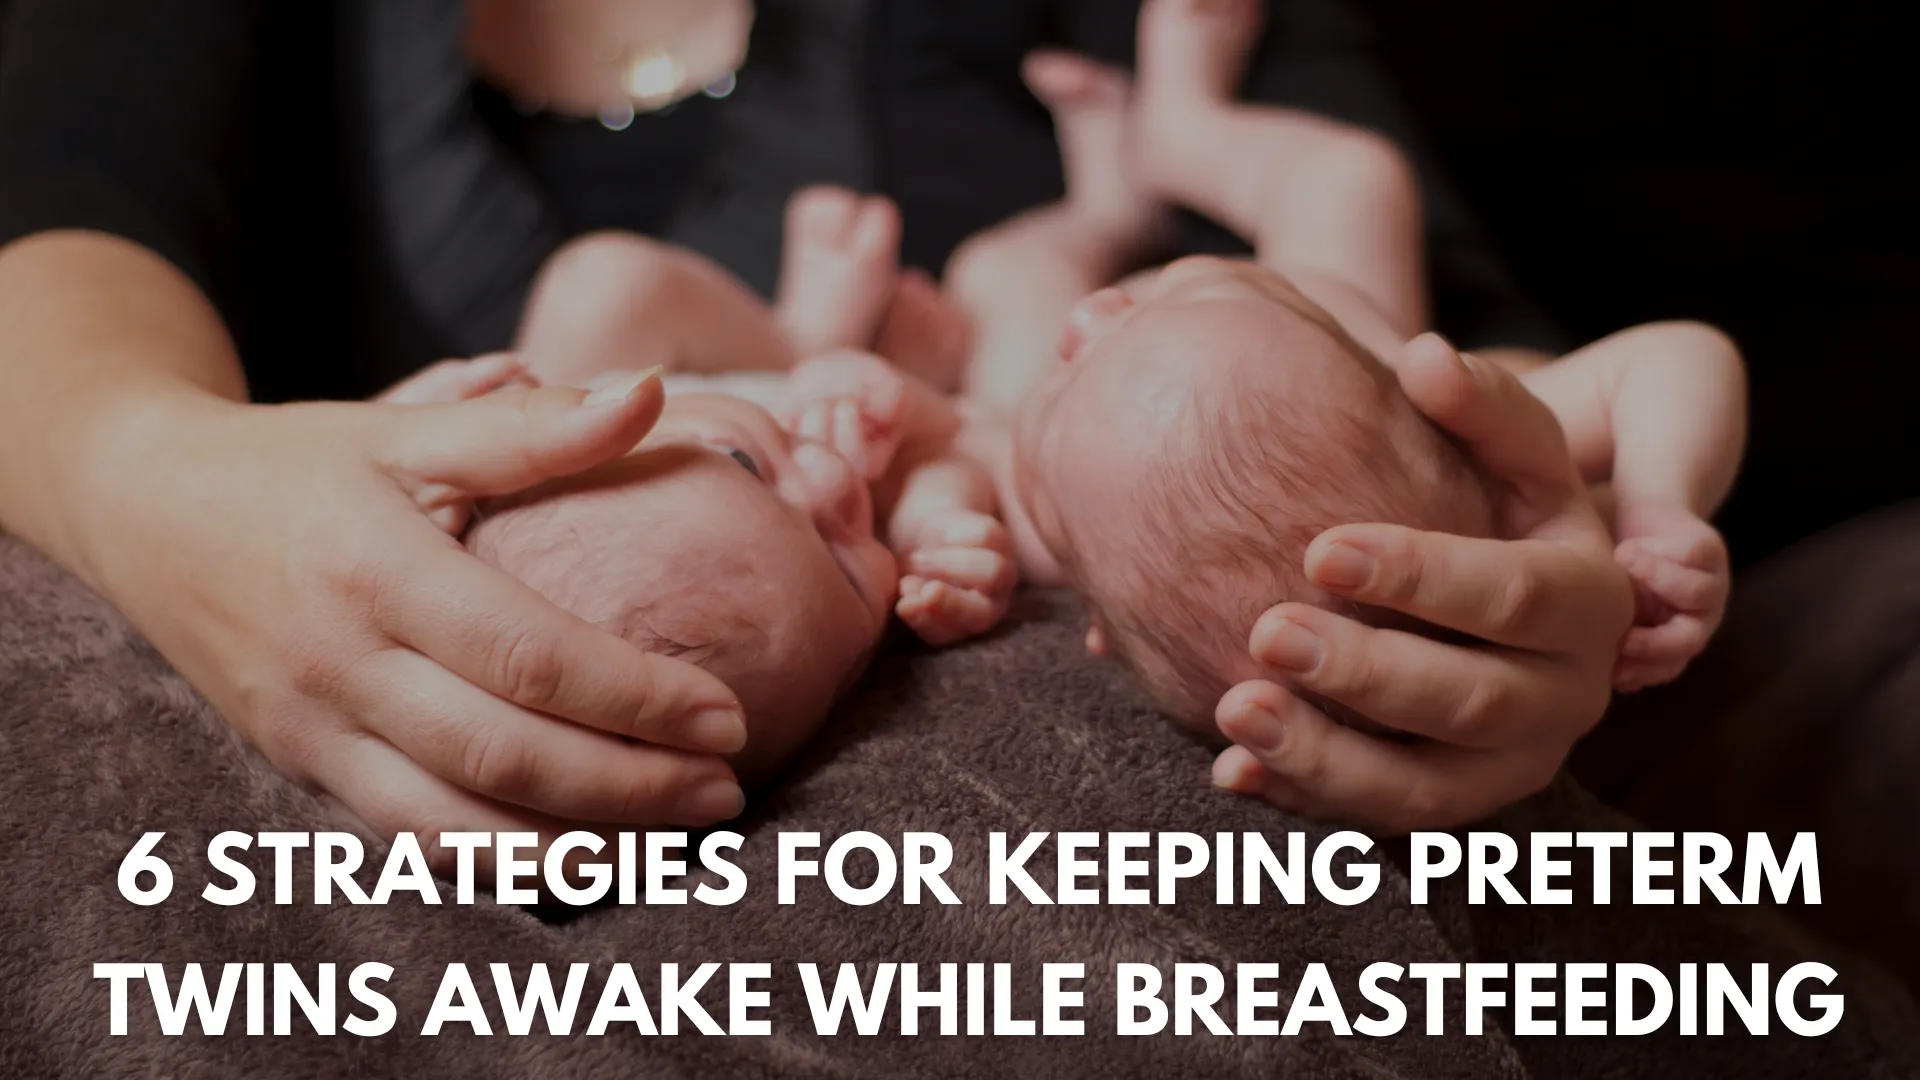 Strategies for Keeping Preterm Twins Awake While Breastfeeding